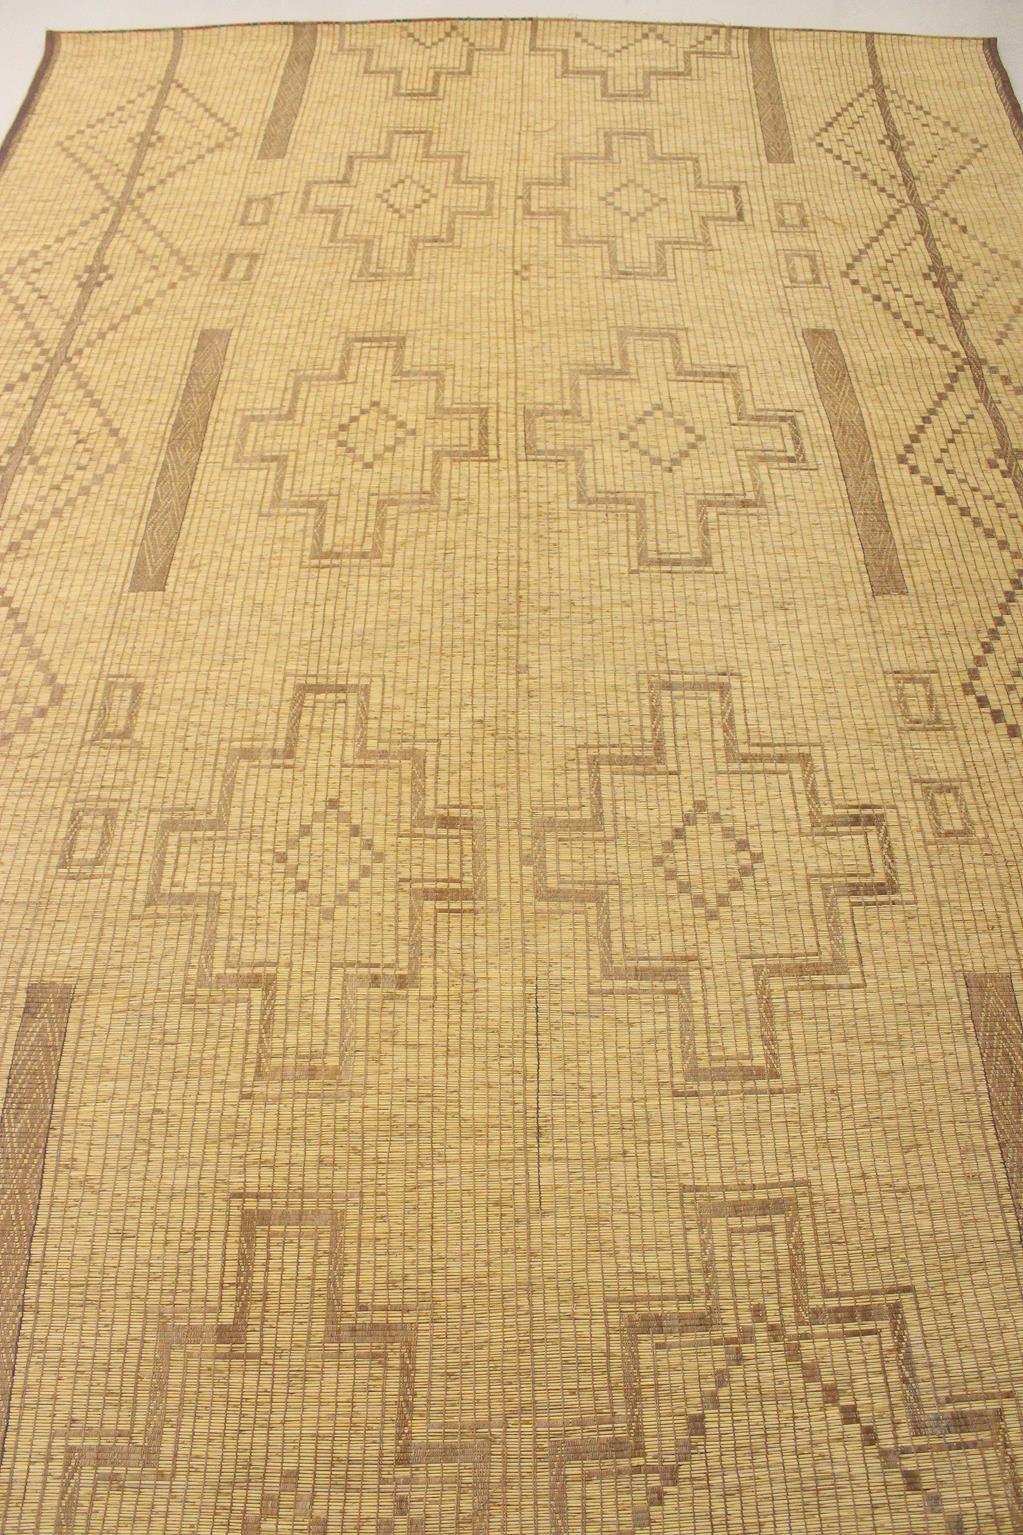 20th Century Vintage African Mauritanian Tuareg mat in camel - 9.7x14feet / 297x425cm